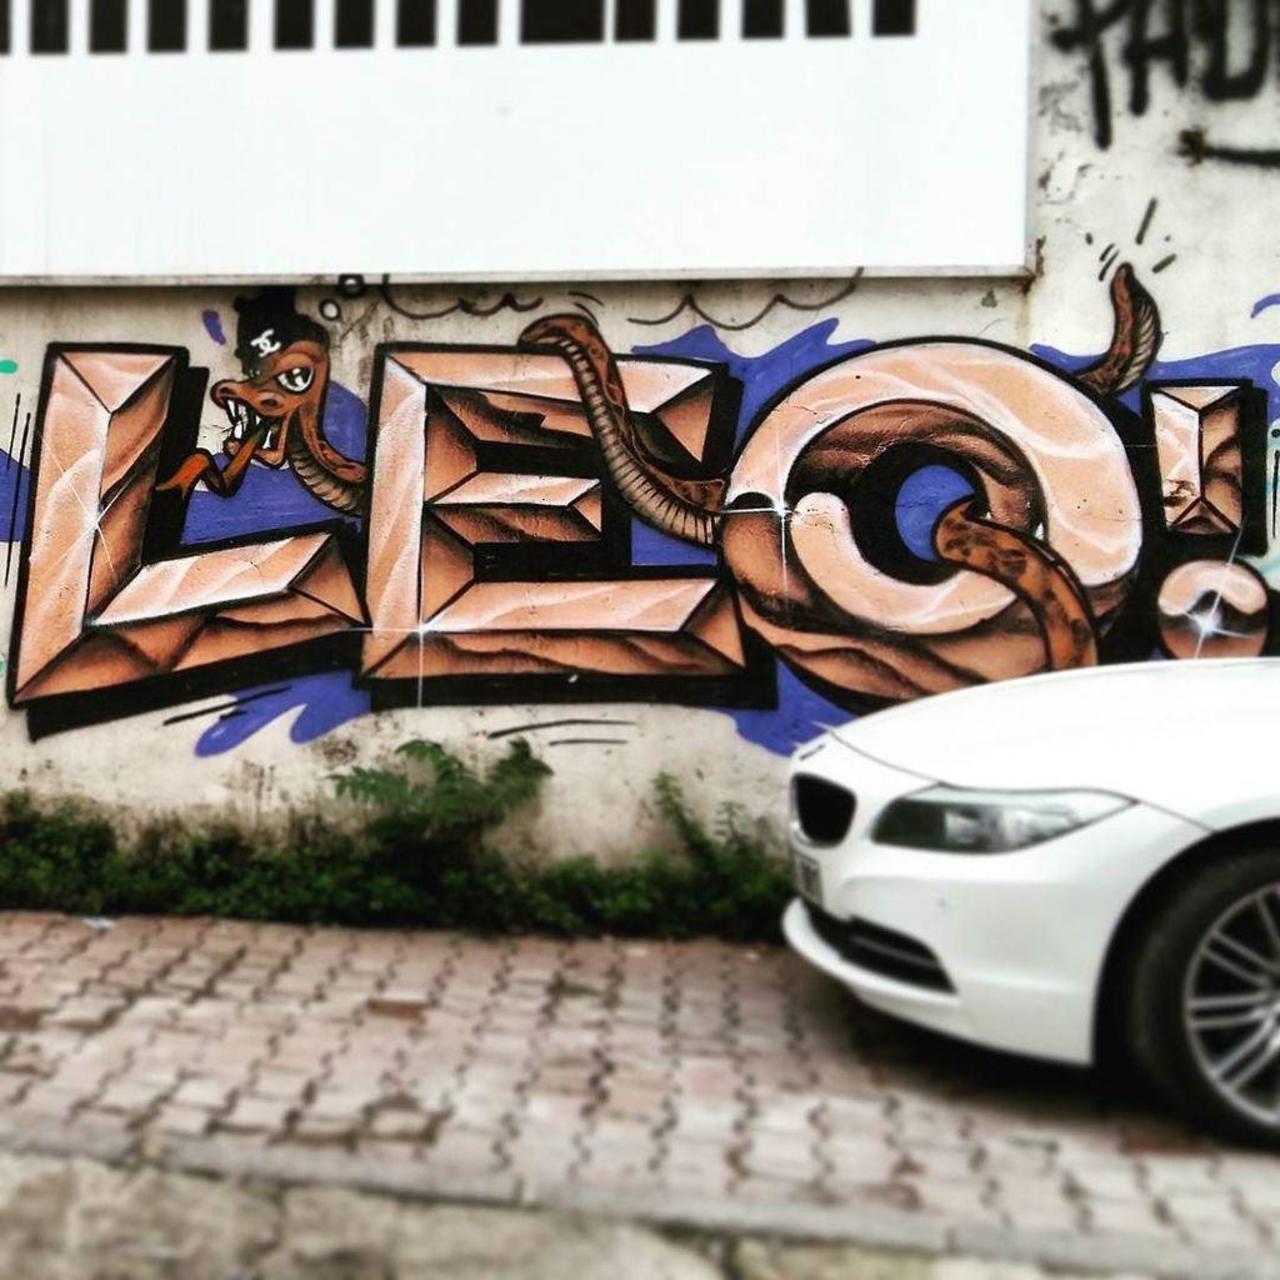 RT @StArtEverywhere: By @leolunatic @dsb_graff #dsb_graff @rsa_graffiti @streetawesome #streetart #urbanart #graffitiart #graffiti #stre… http://t.co/AmM05XSCpk